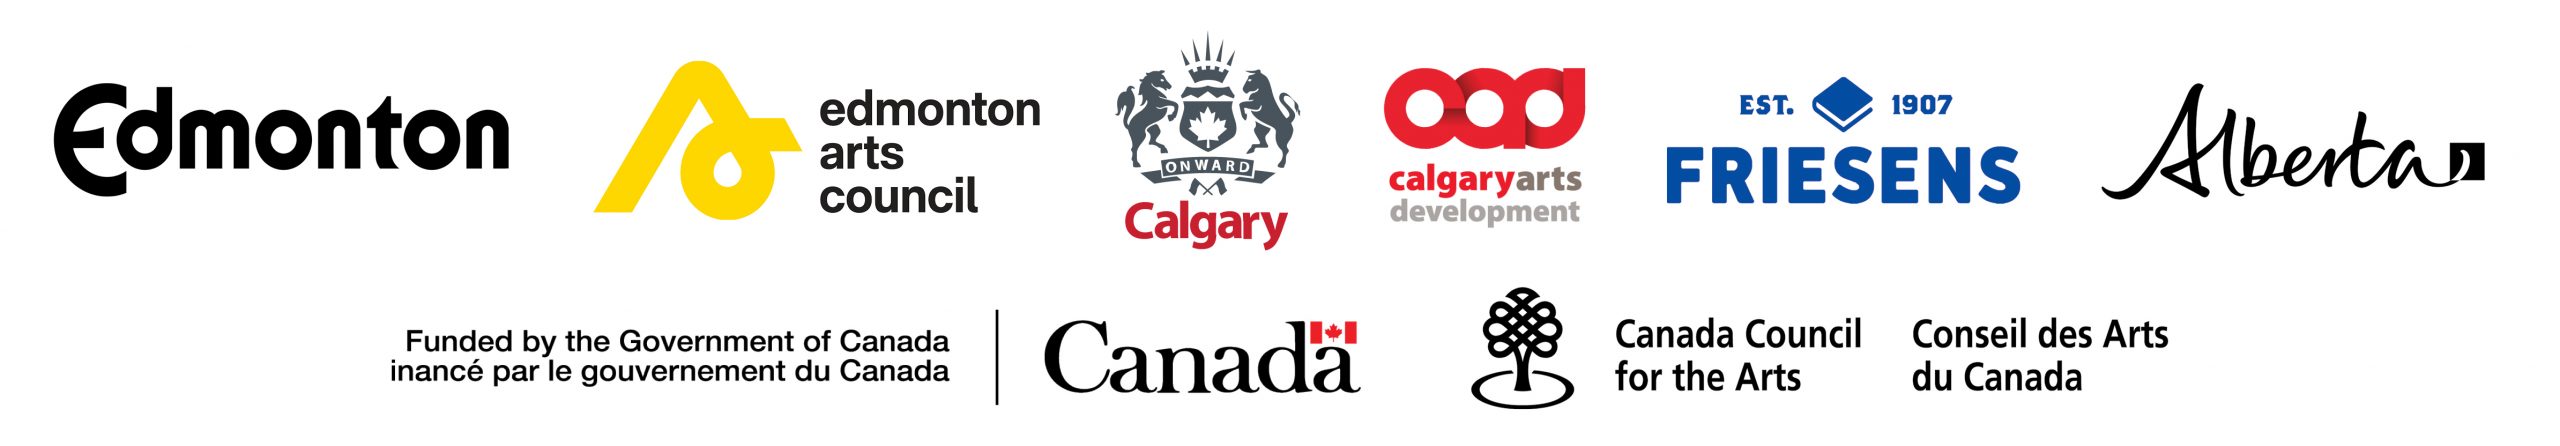 Logos for the City of Edmonton, Edmonton Arts Council, City of Calgary, Calgary Arts Development, Friesens, Government of Alberta, Government of Canada, and Canada Council for the Arts.